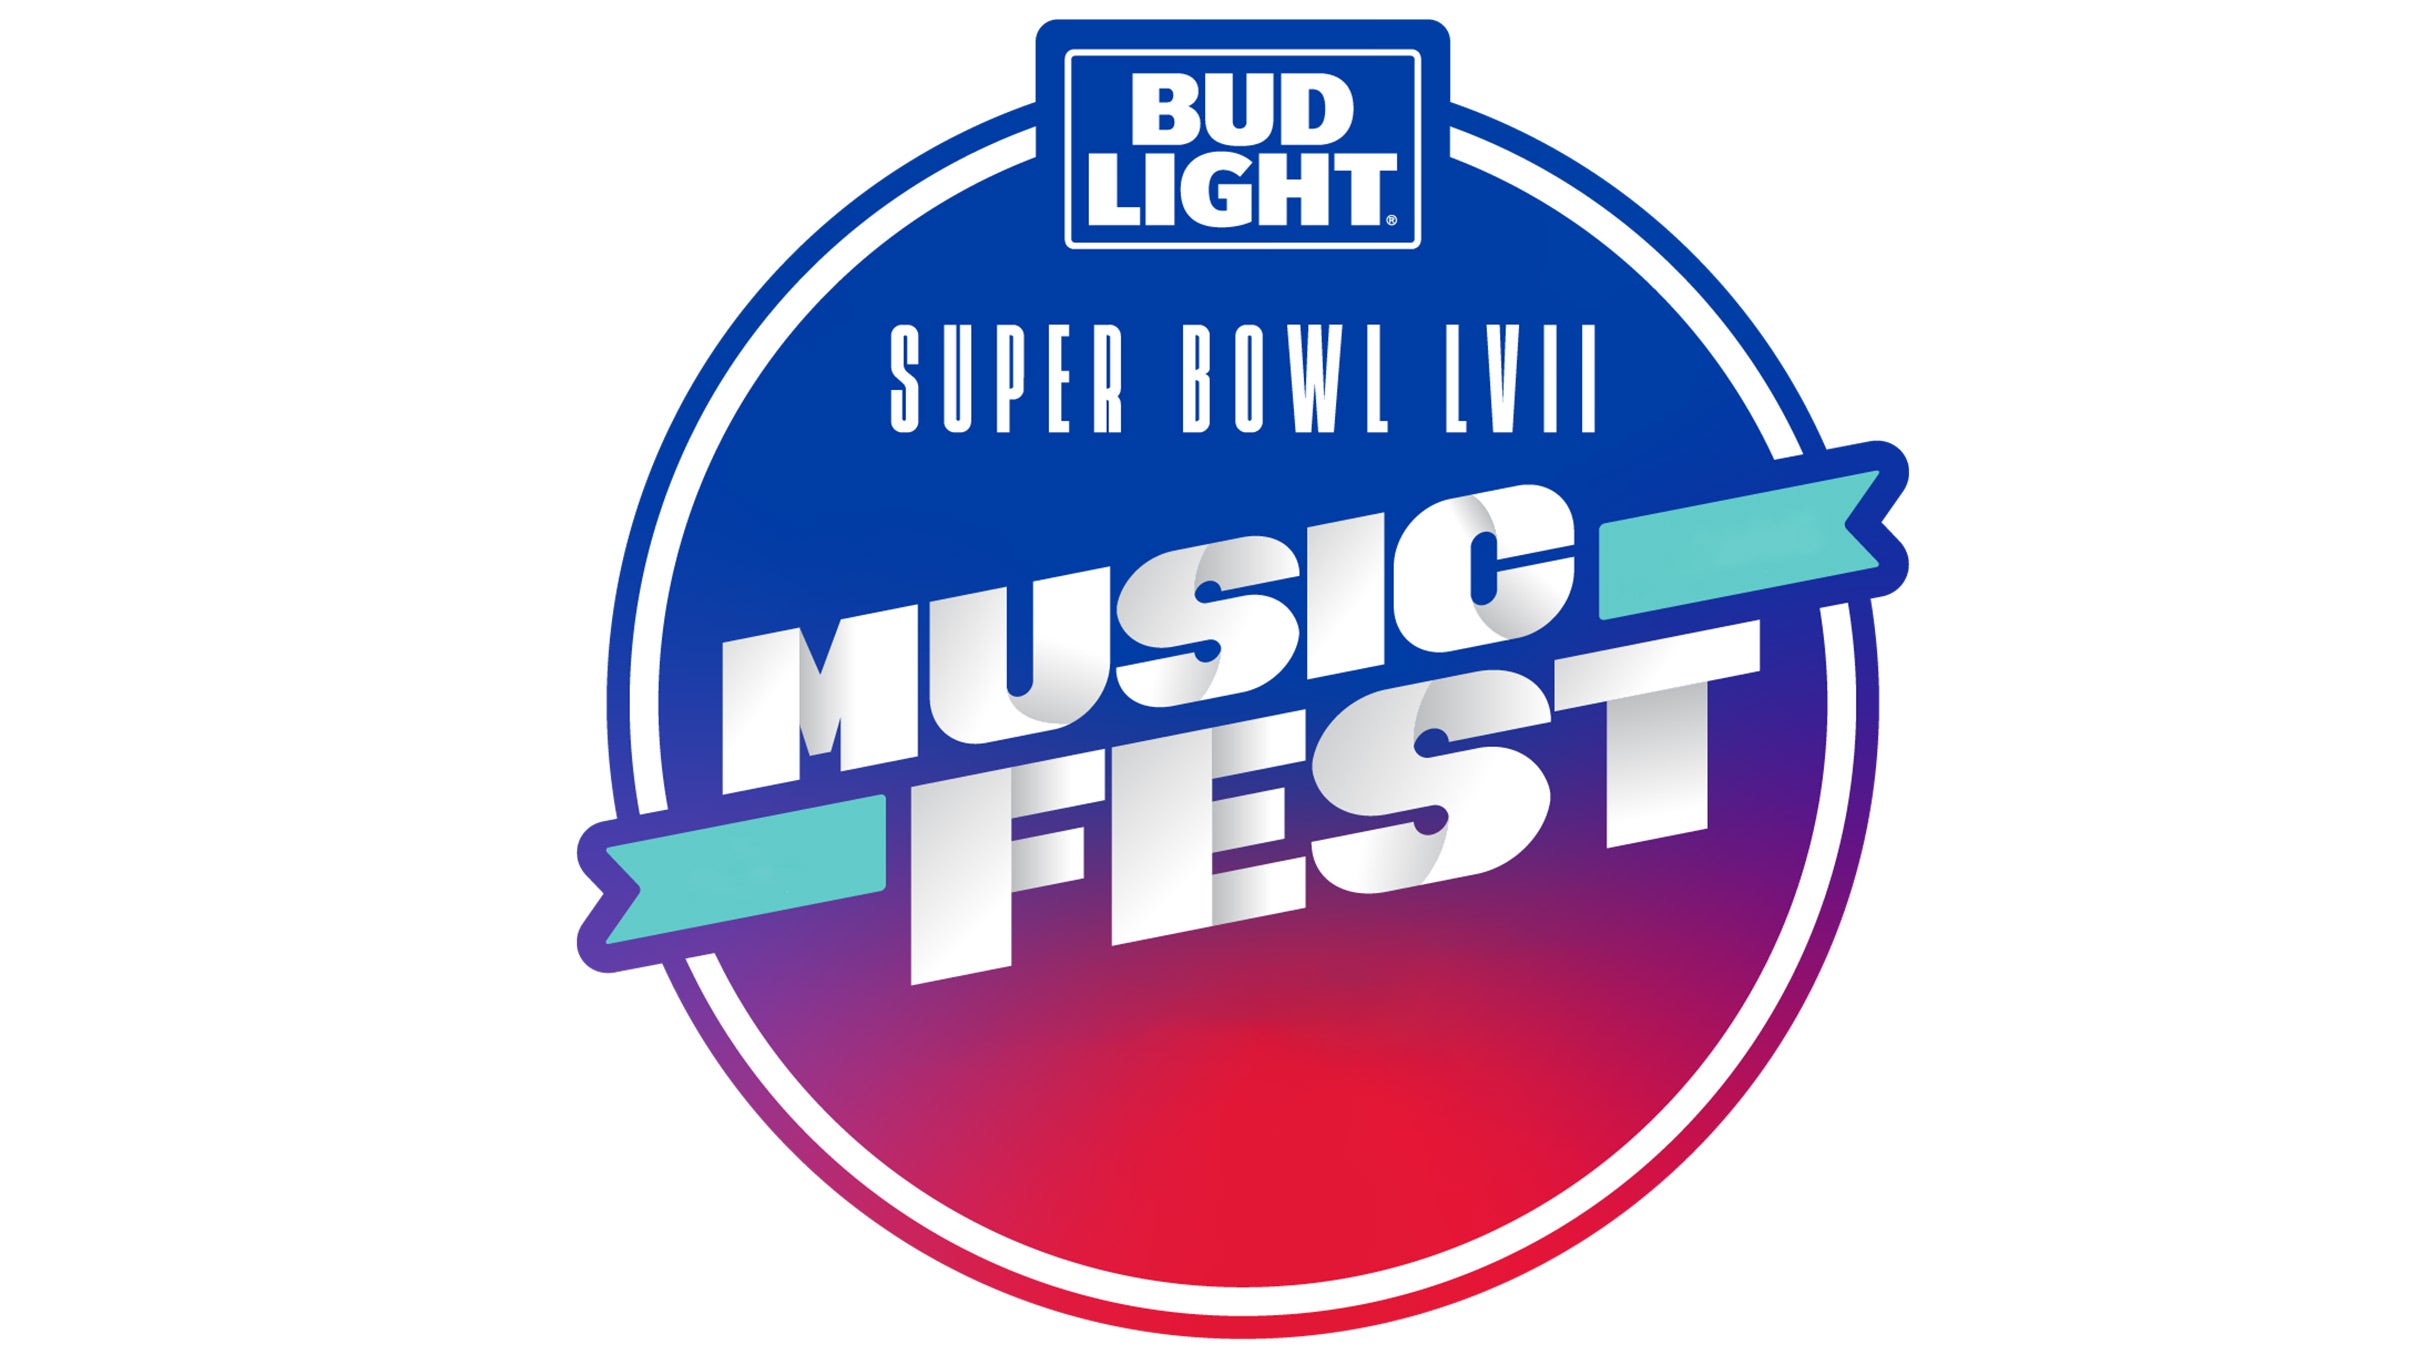 Bud Light Super Bowl Music Fest - Dave Matthews Band presale password for legit tickets in Phoenix